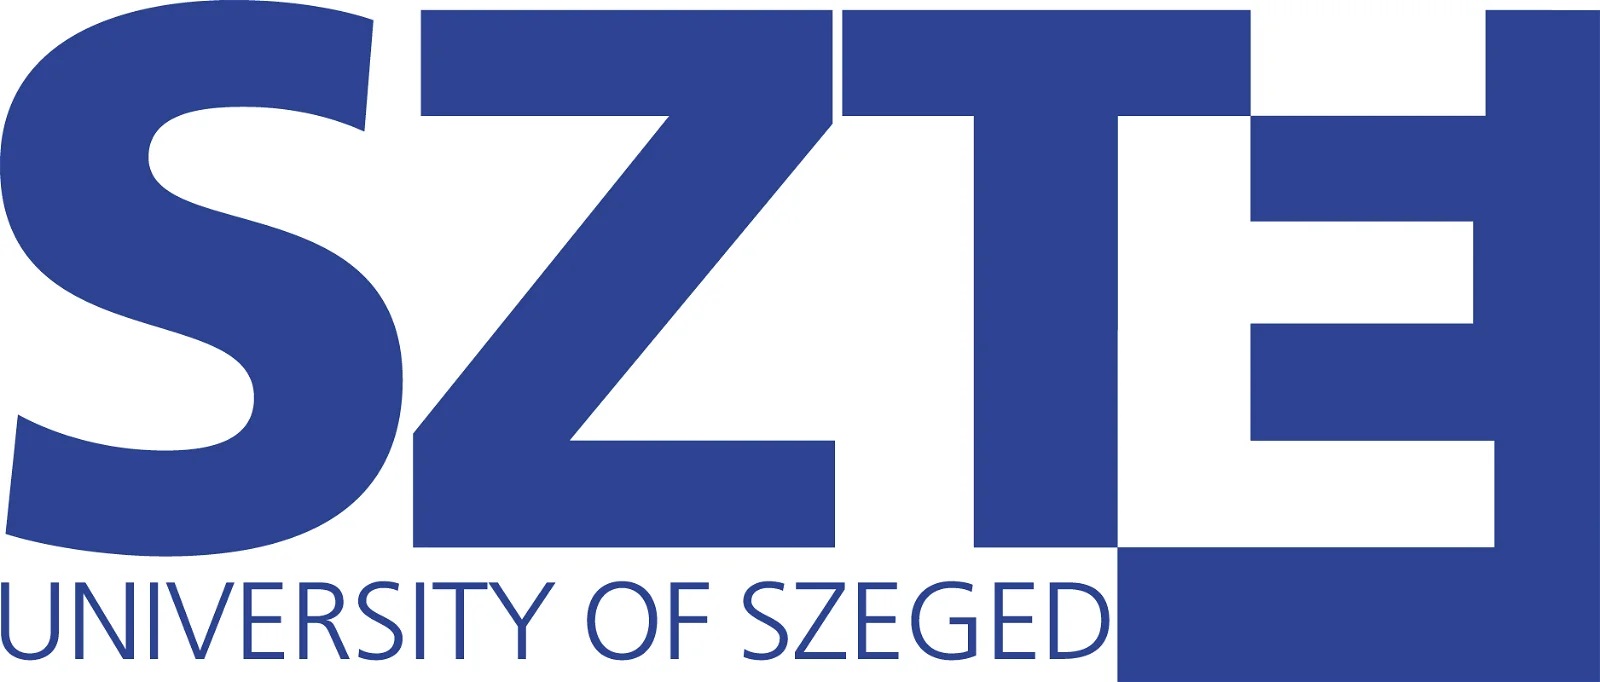 The University of Szeged, Венгрия